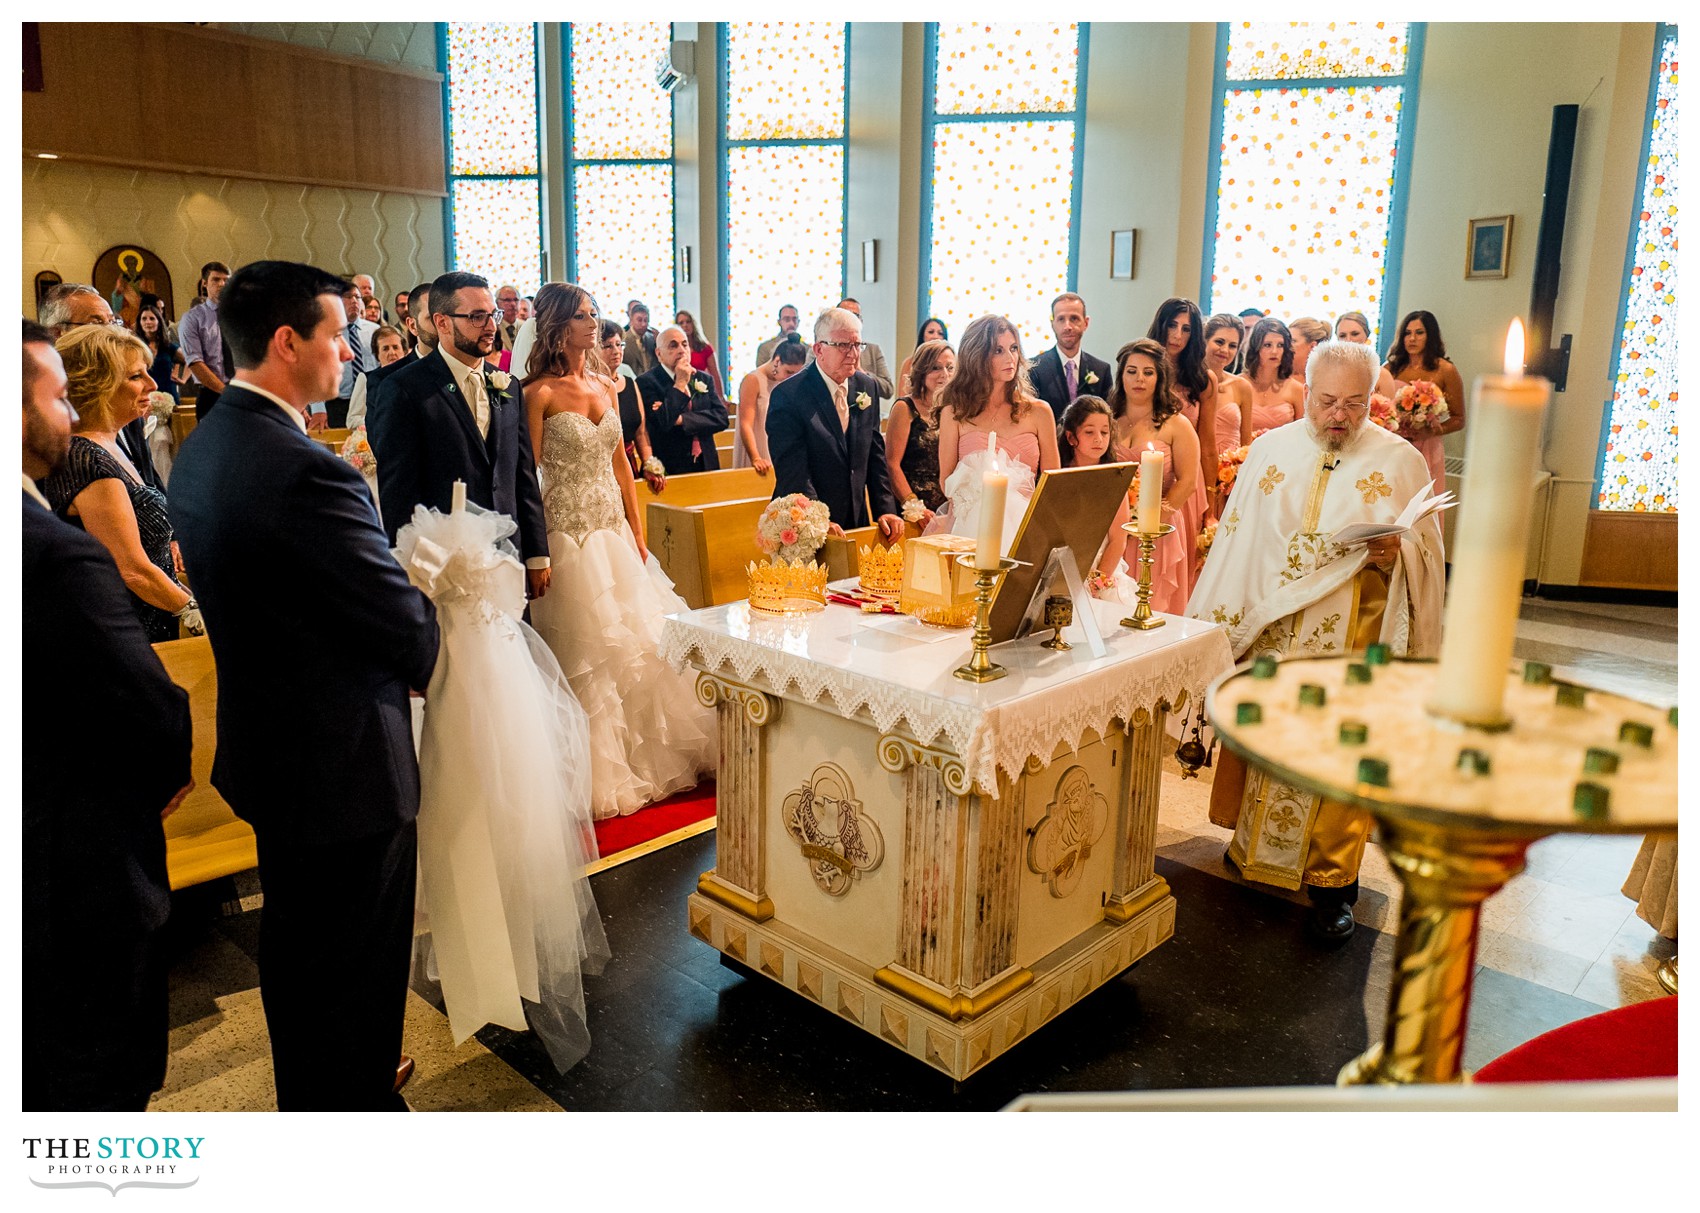 St. Michael's Orthodox wedding ceremony in Geneva, NY